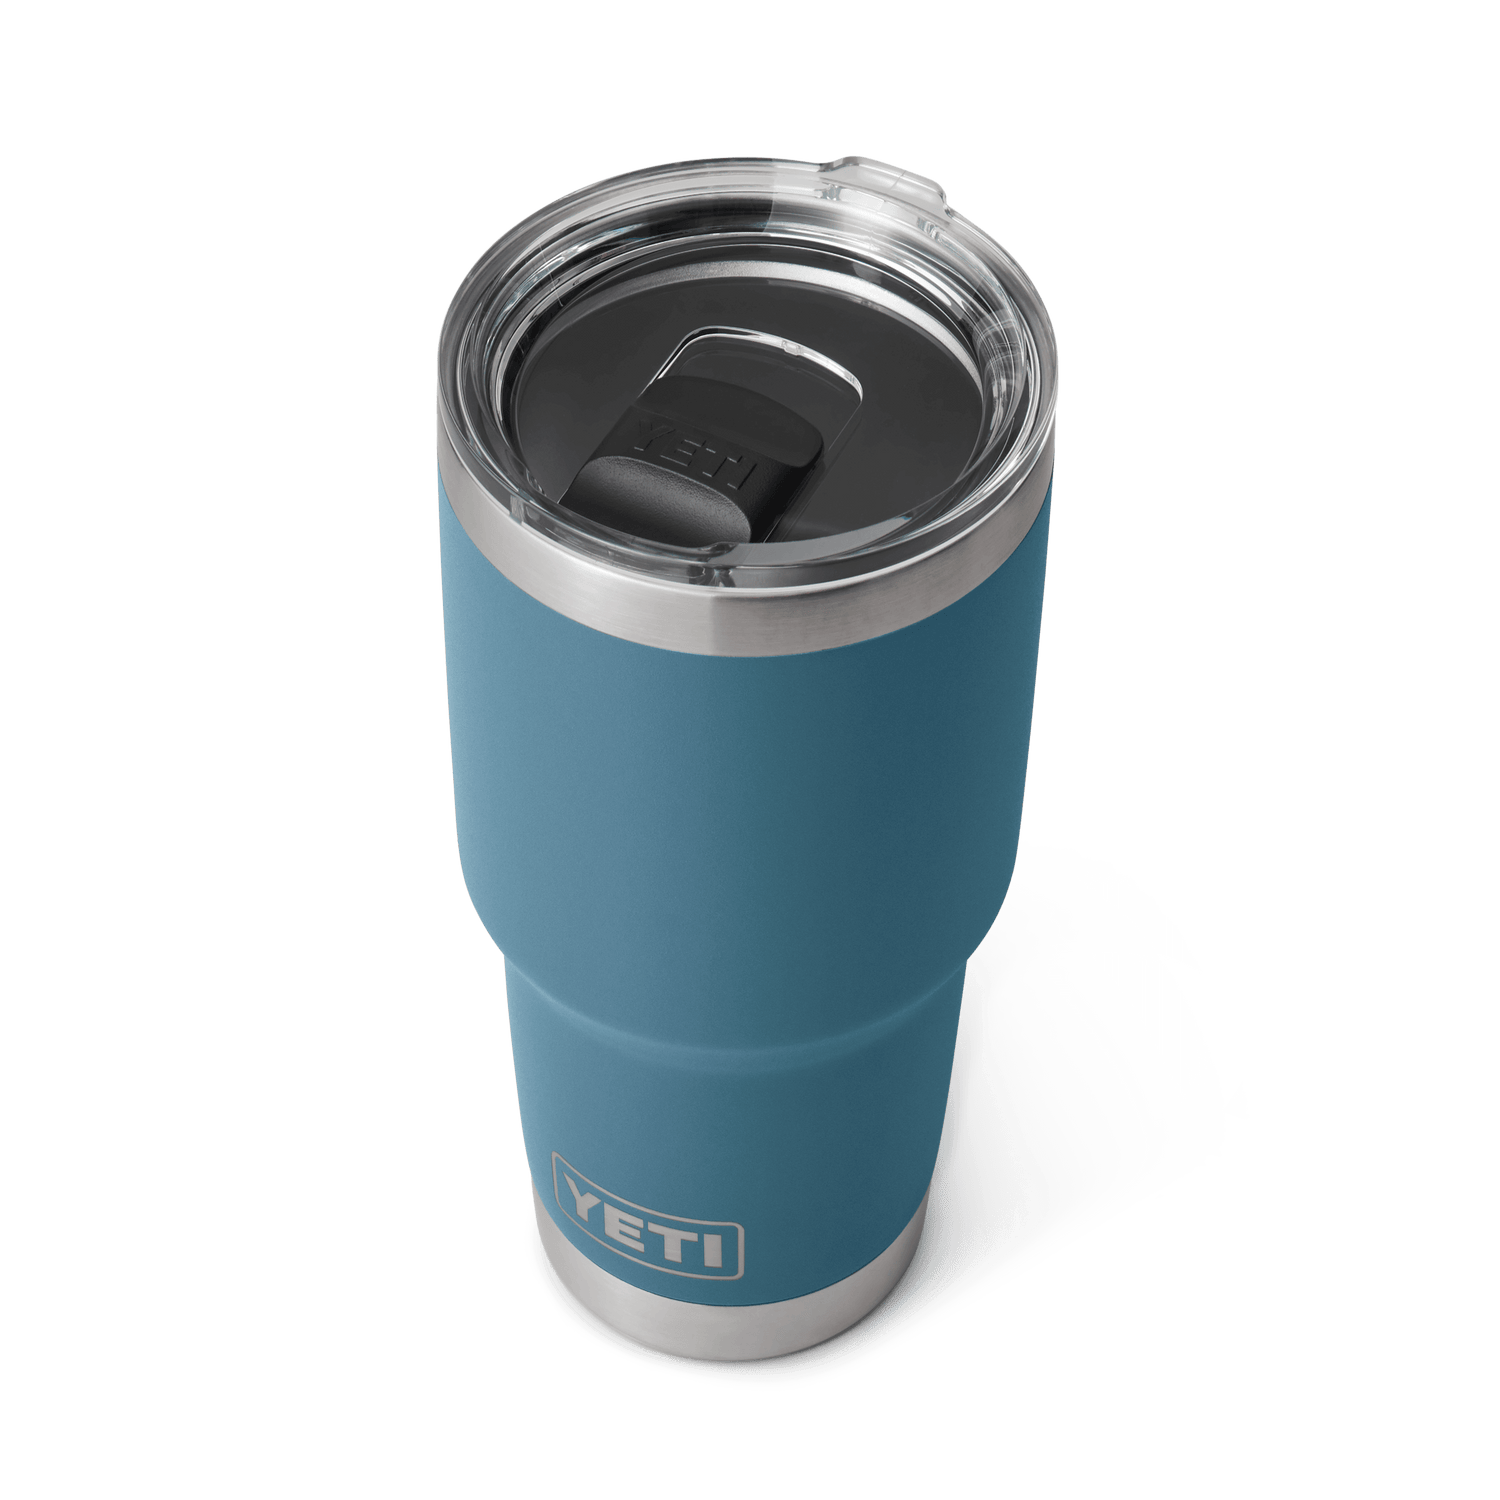 YETI Rambler® 30 oz Beker van 887 ml Nordic Blue